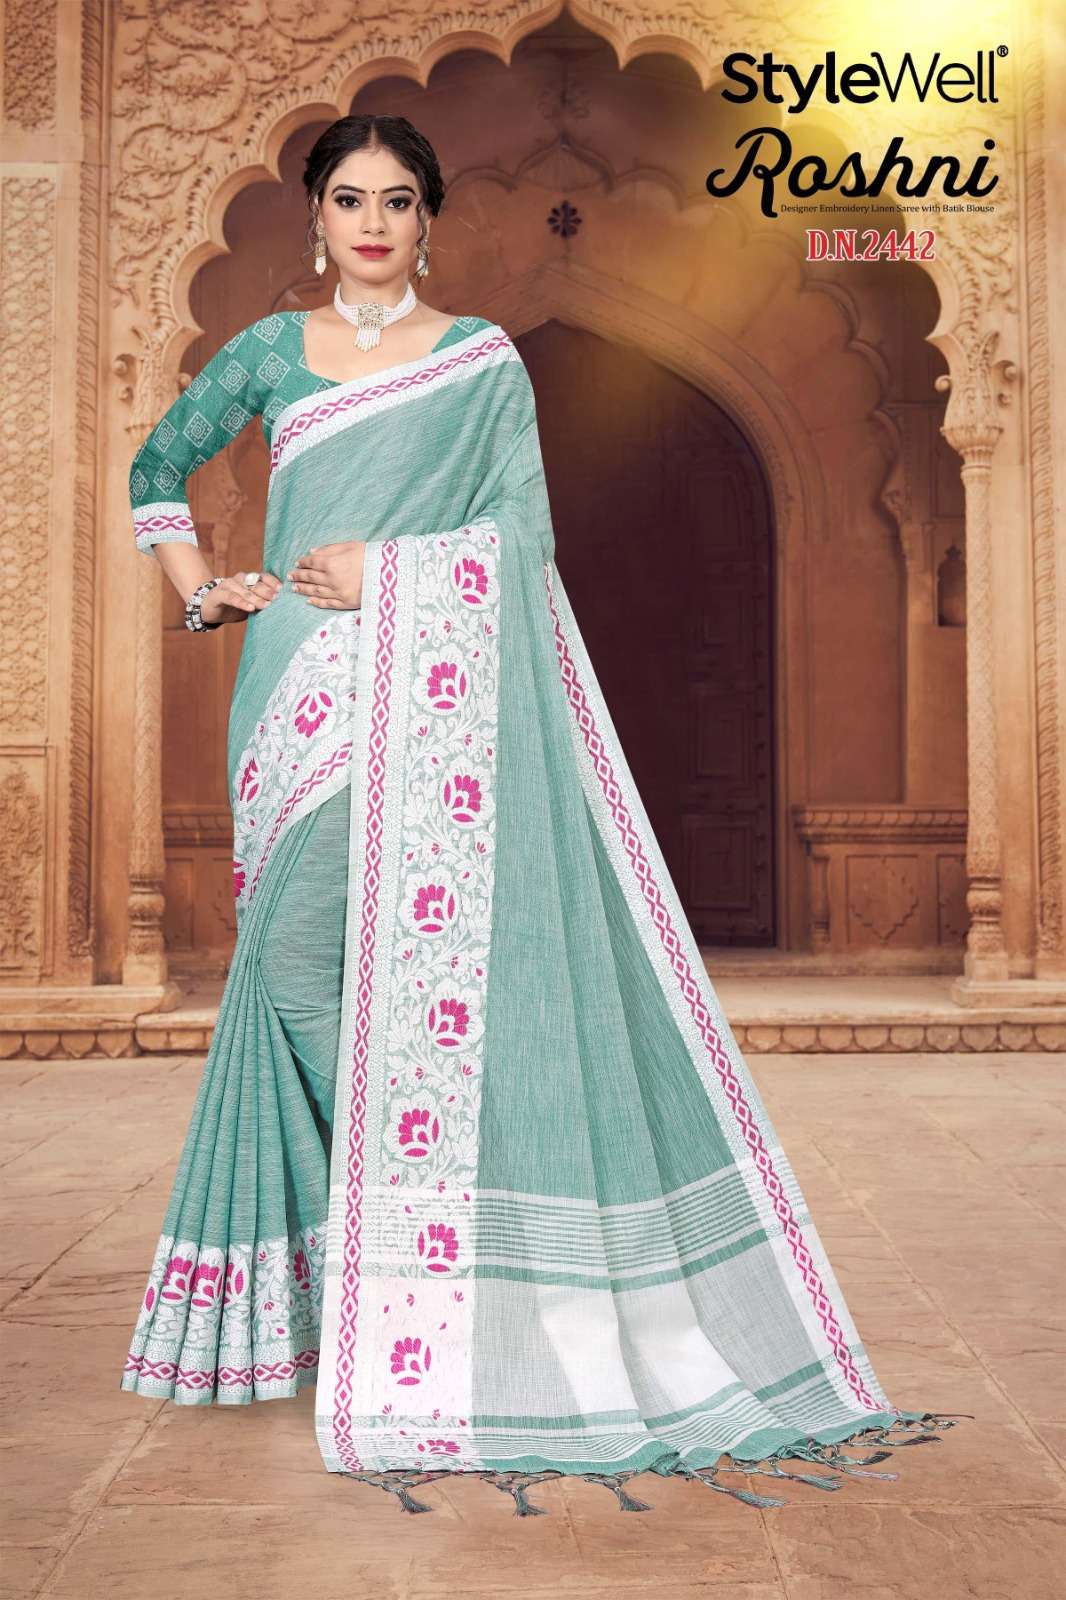 stylewell roshni linen designer lucknowi saree